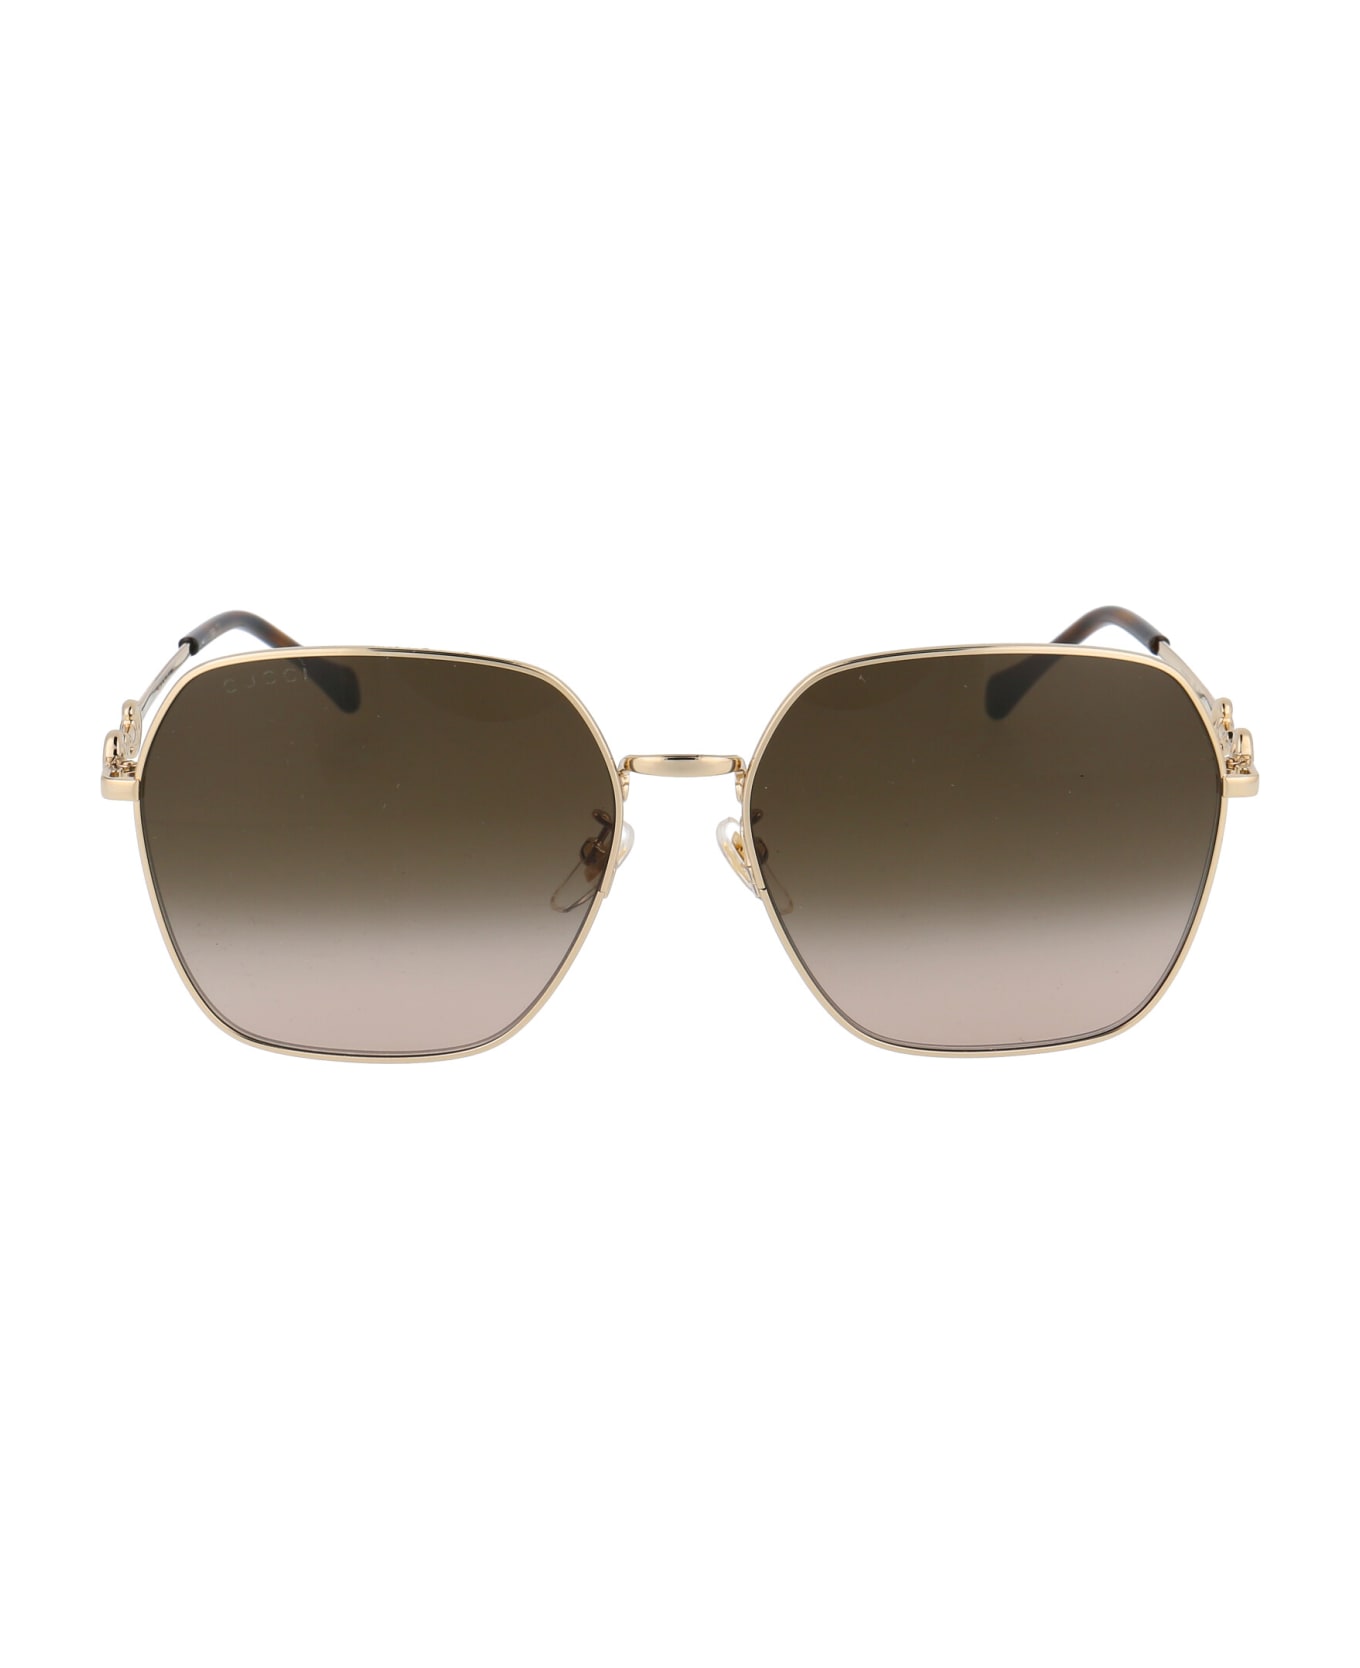 Gucci Eyewear Gg0882sa Sunglasses - 002 GOLD GOLD BROWN